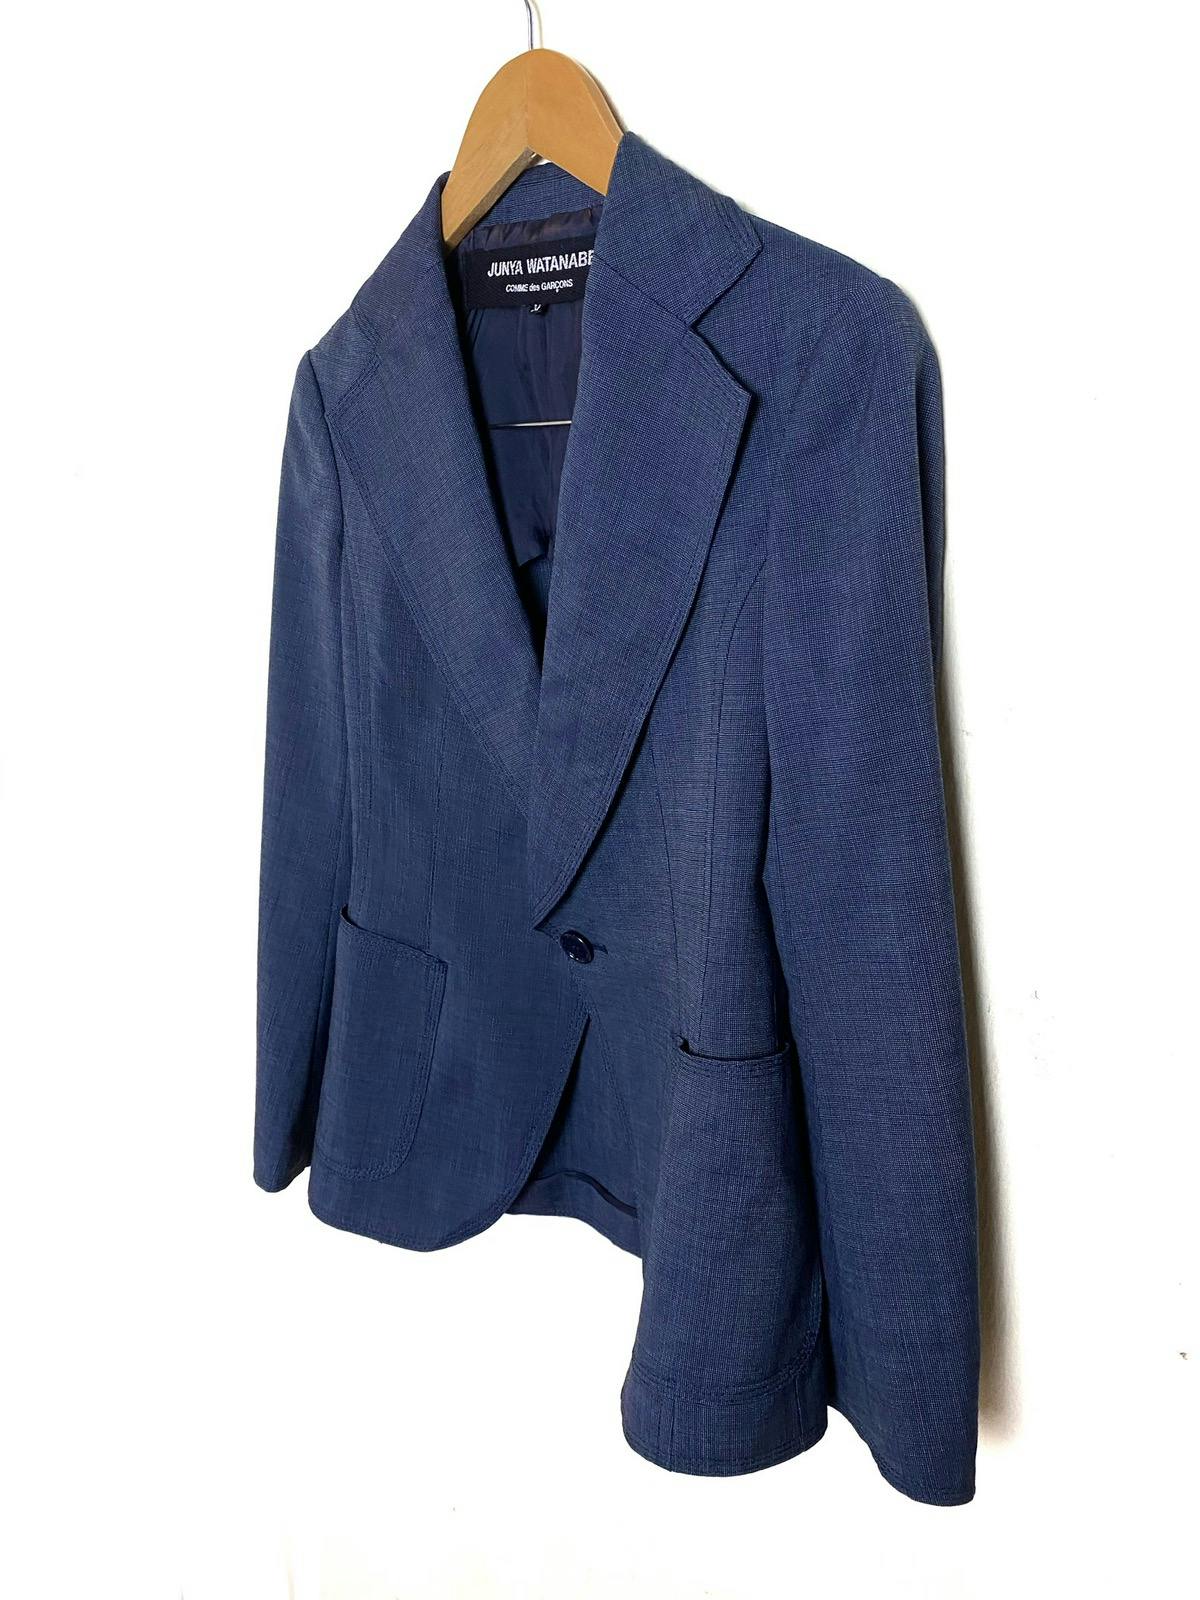 Comme Des Garcons Junya Watanabe Slim Suit Jacket Coat AD02 - 4